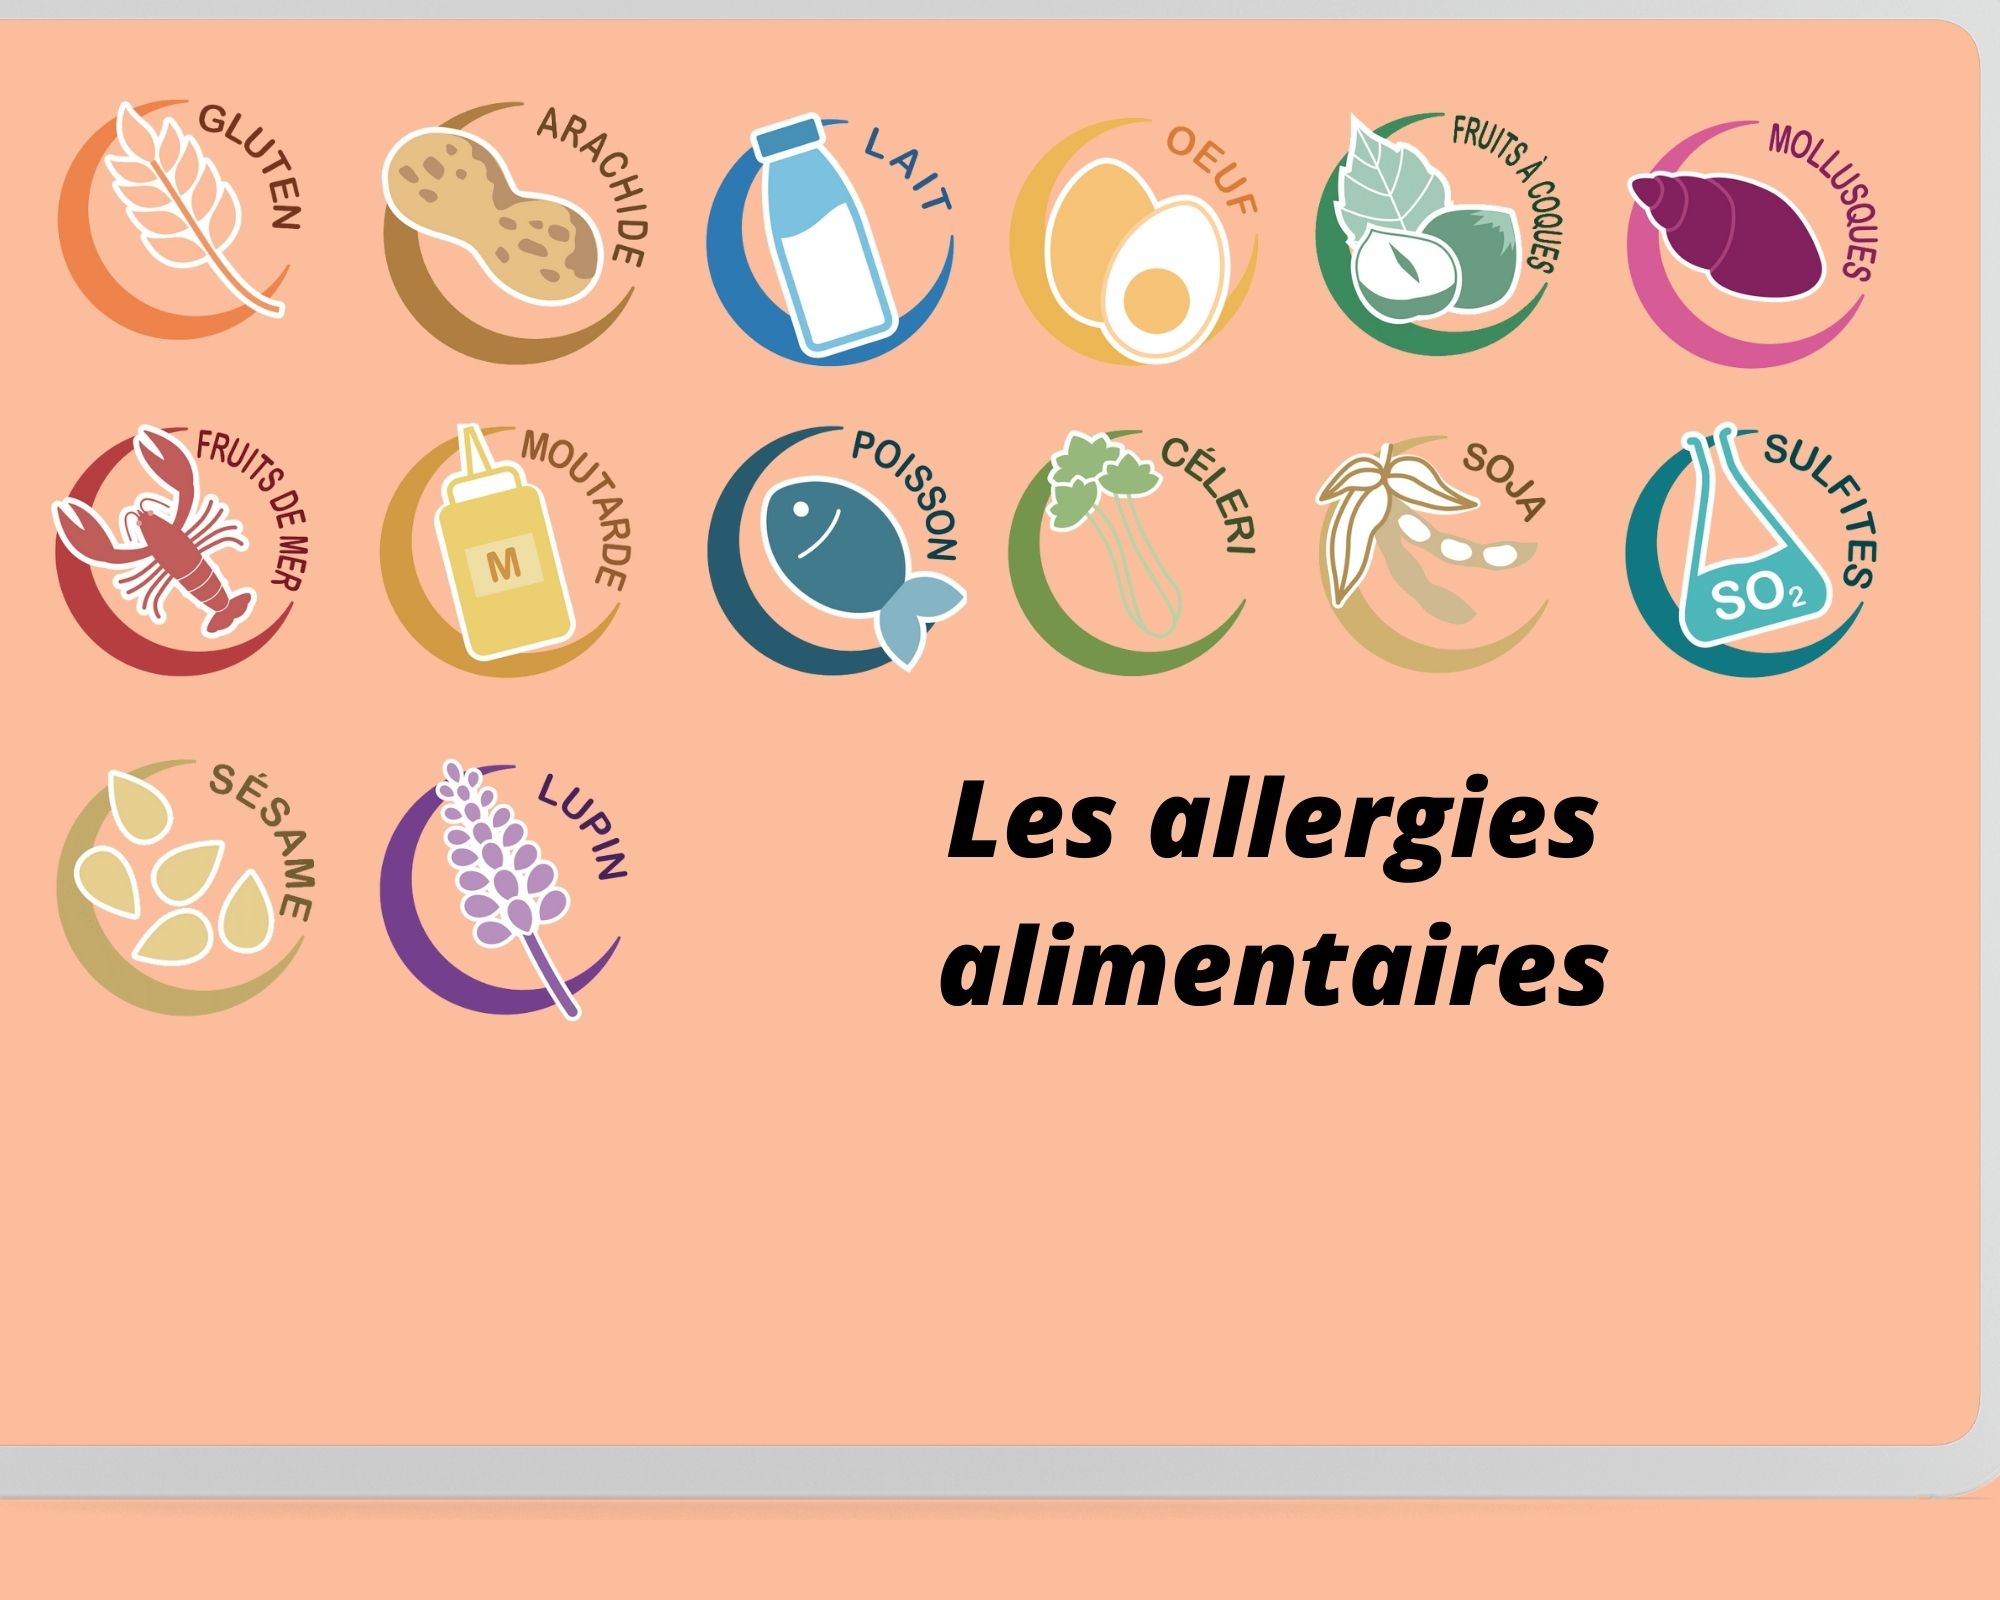 Les allergies alimentaires by les Menus Services